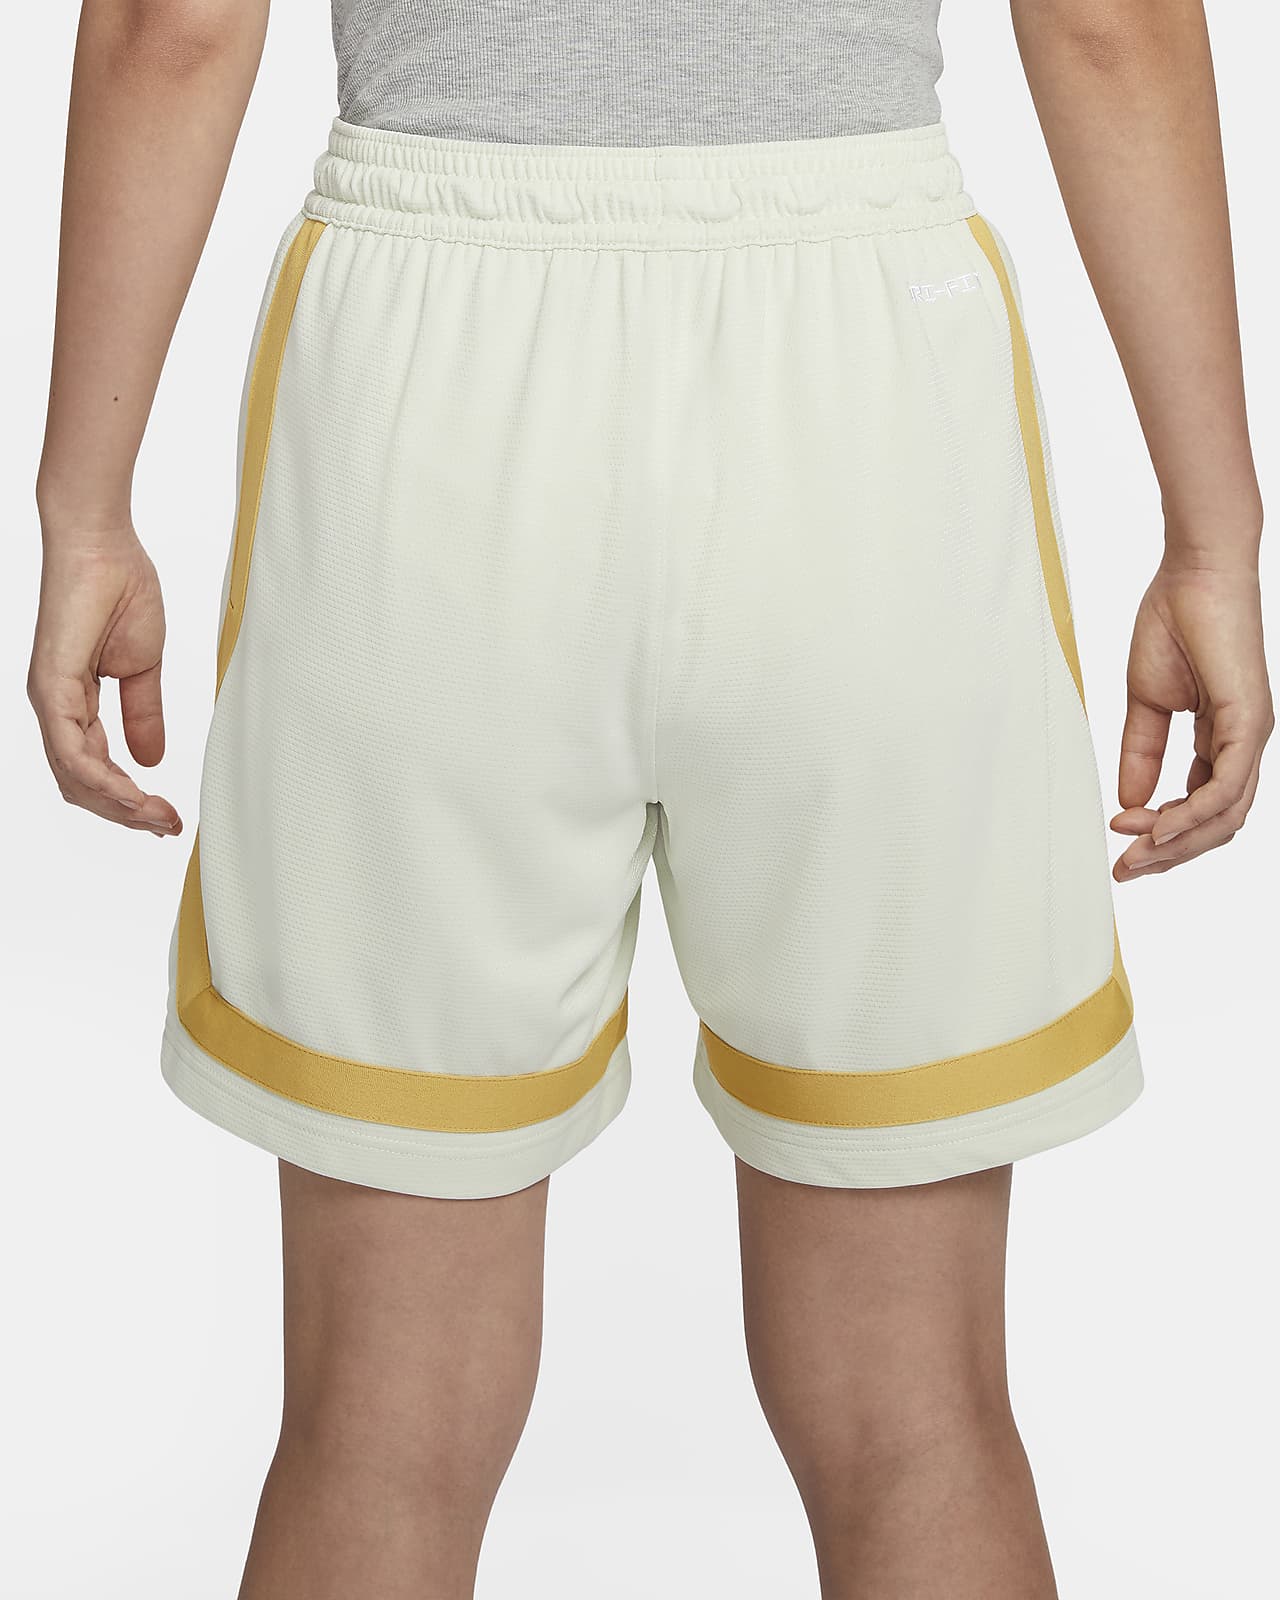 Nike Premium 6 University Gold Basketball Shorts – Puffer Reds